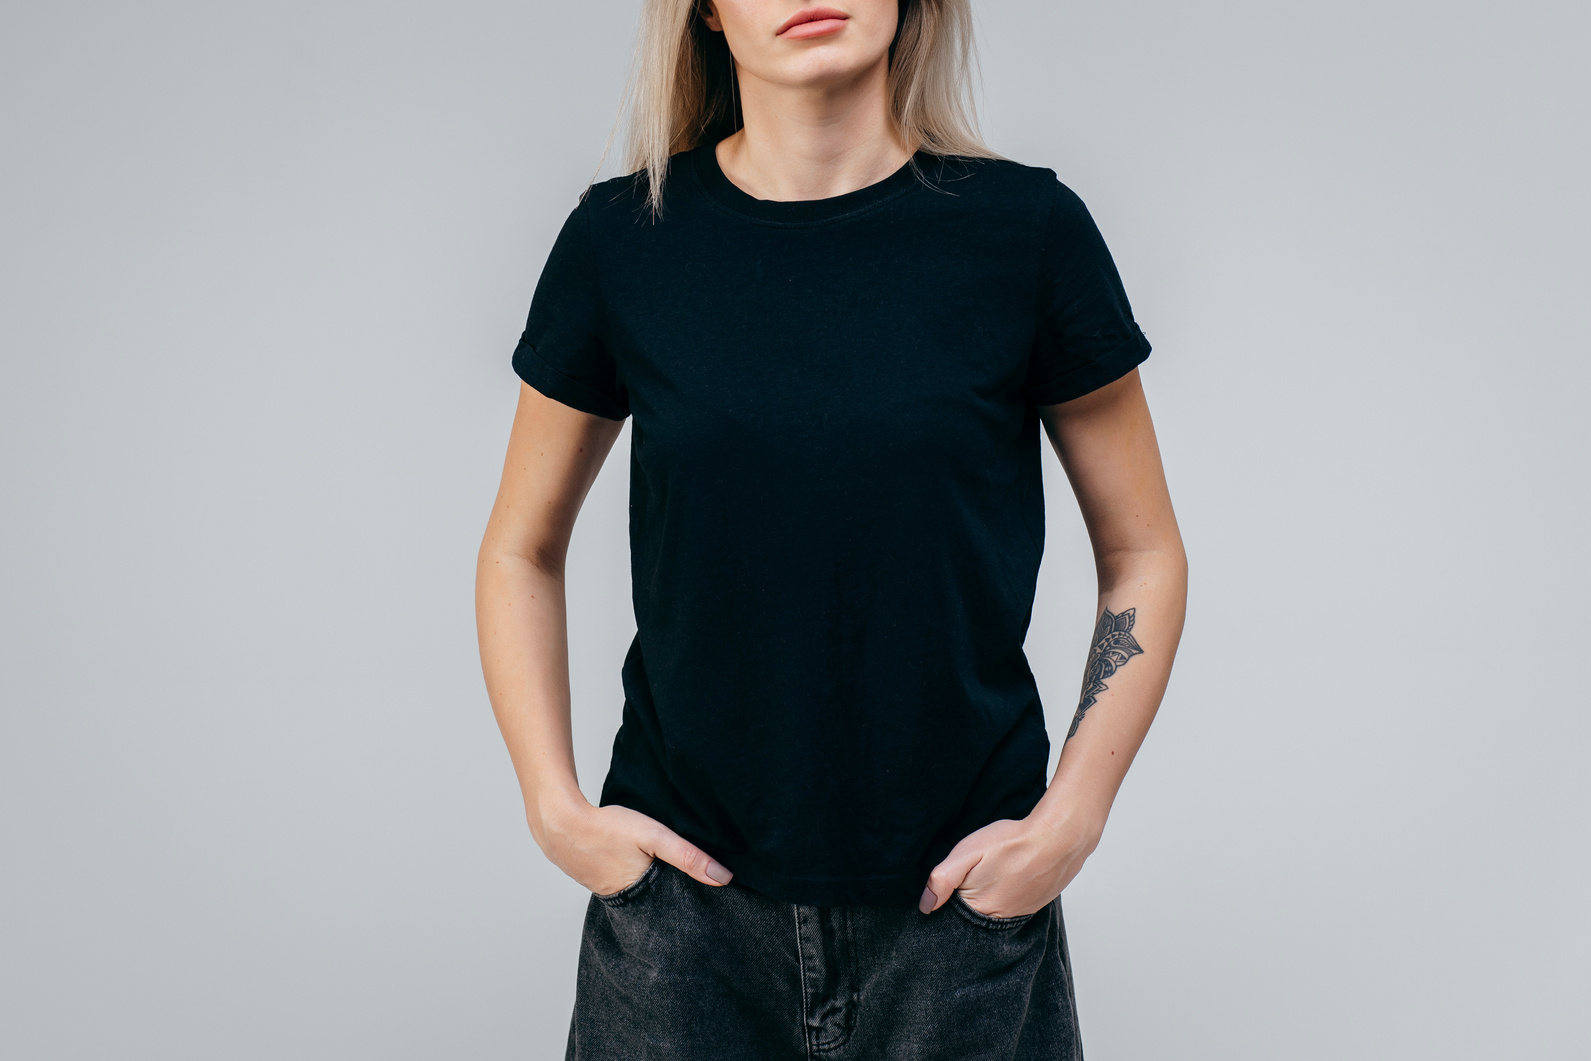 Stylish blonde girl wearing black t-shirt posing in studio